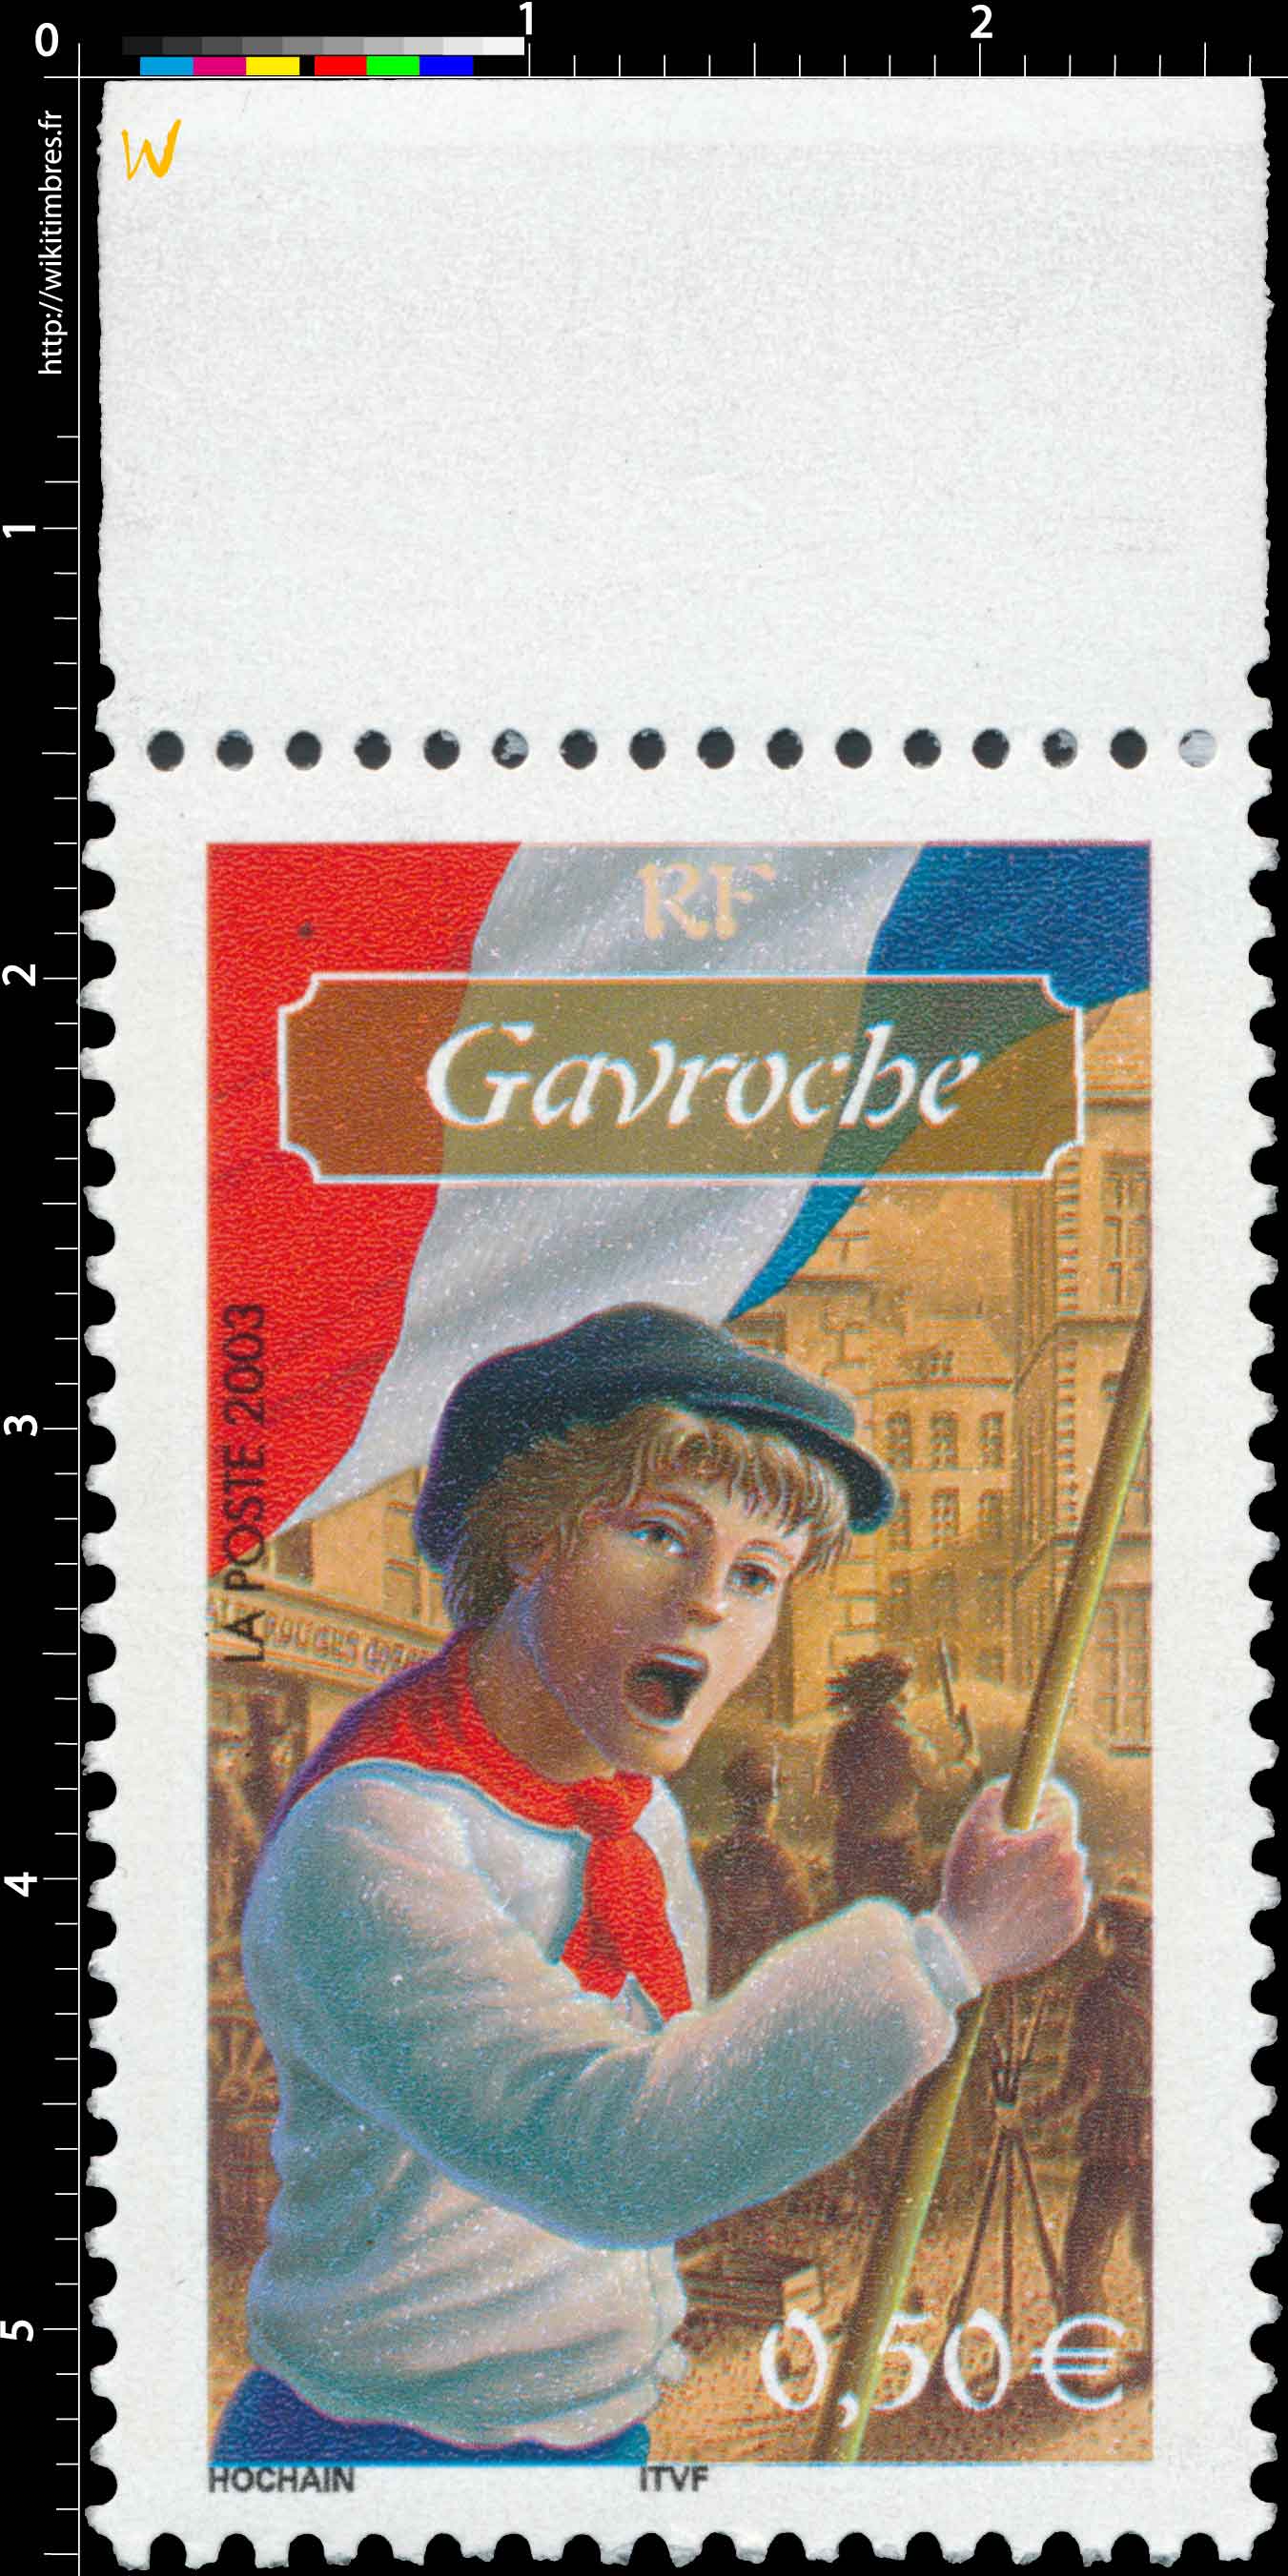 2003 Gavroche